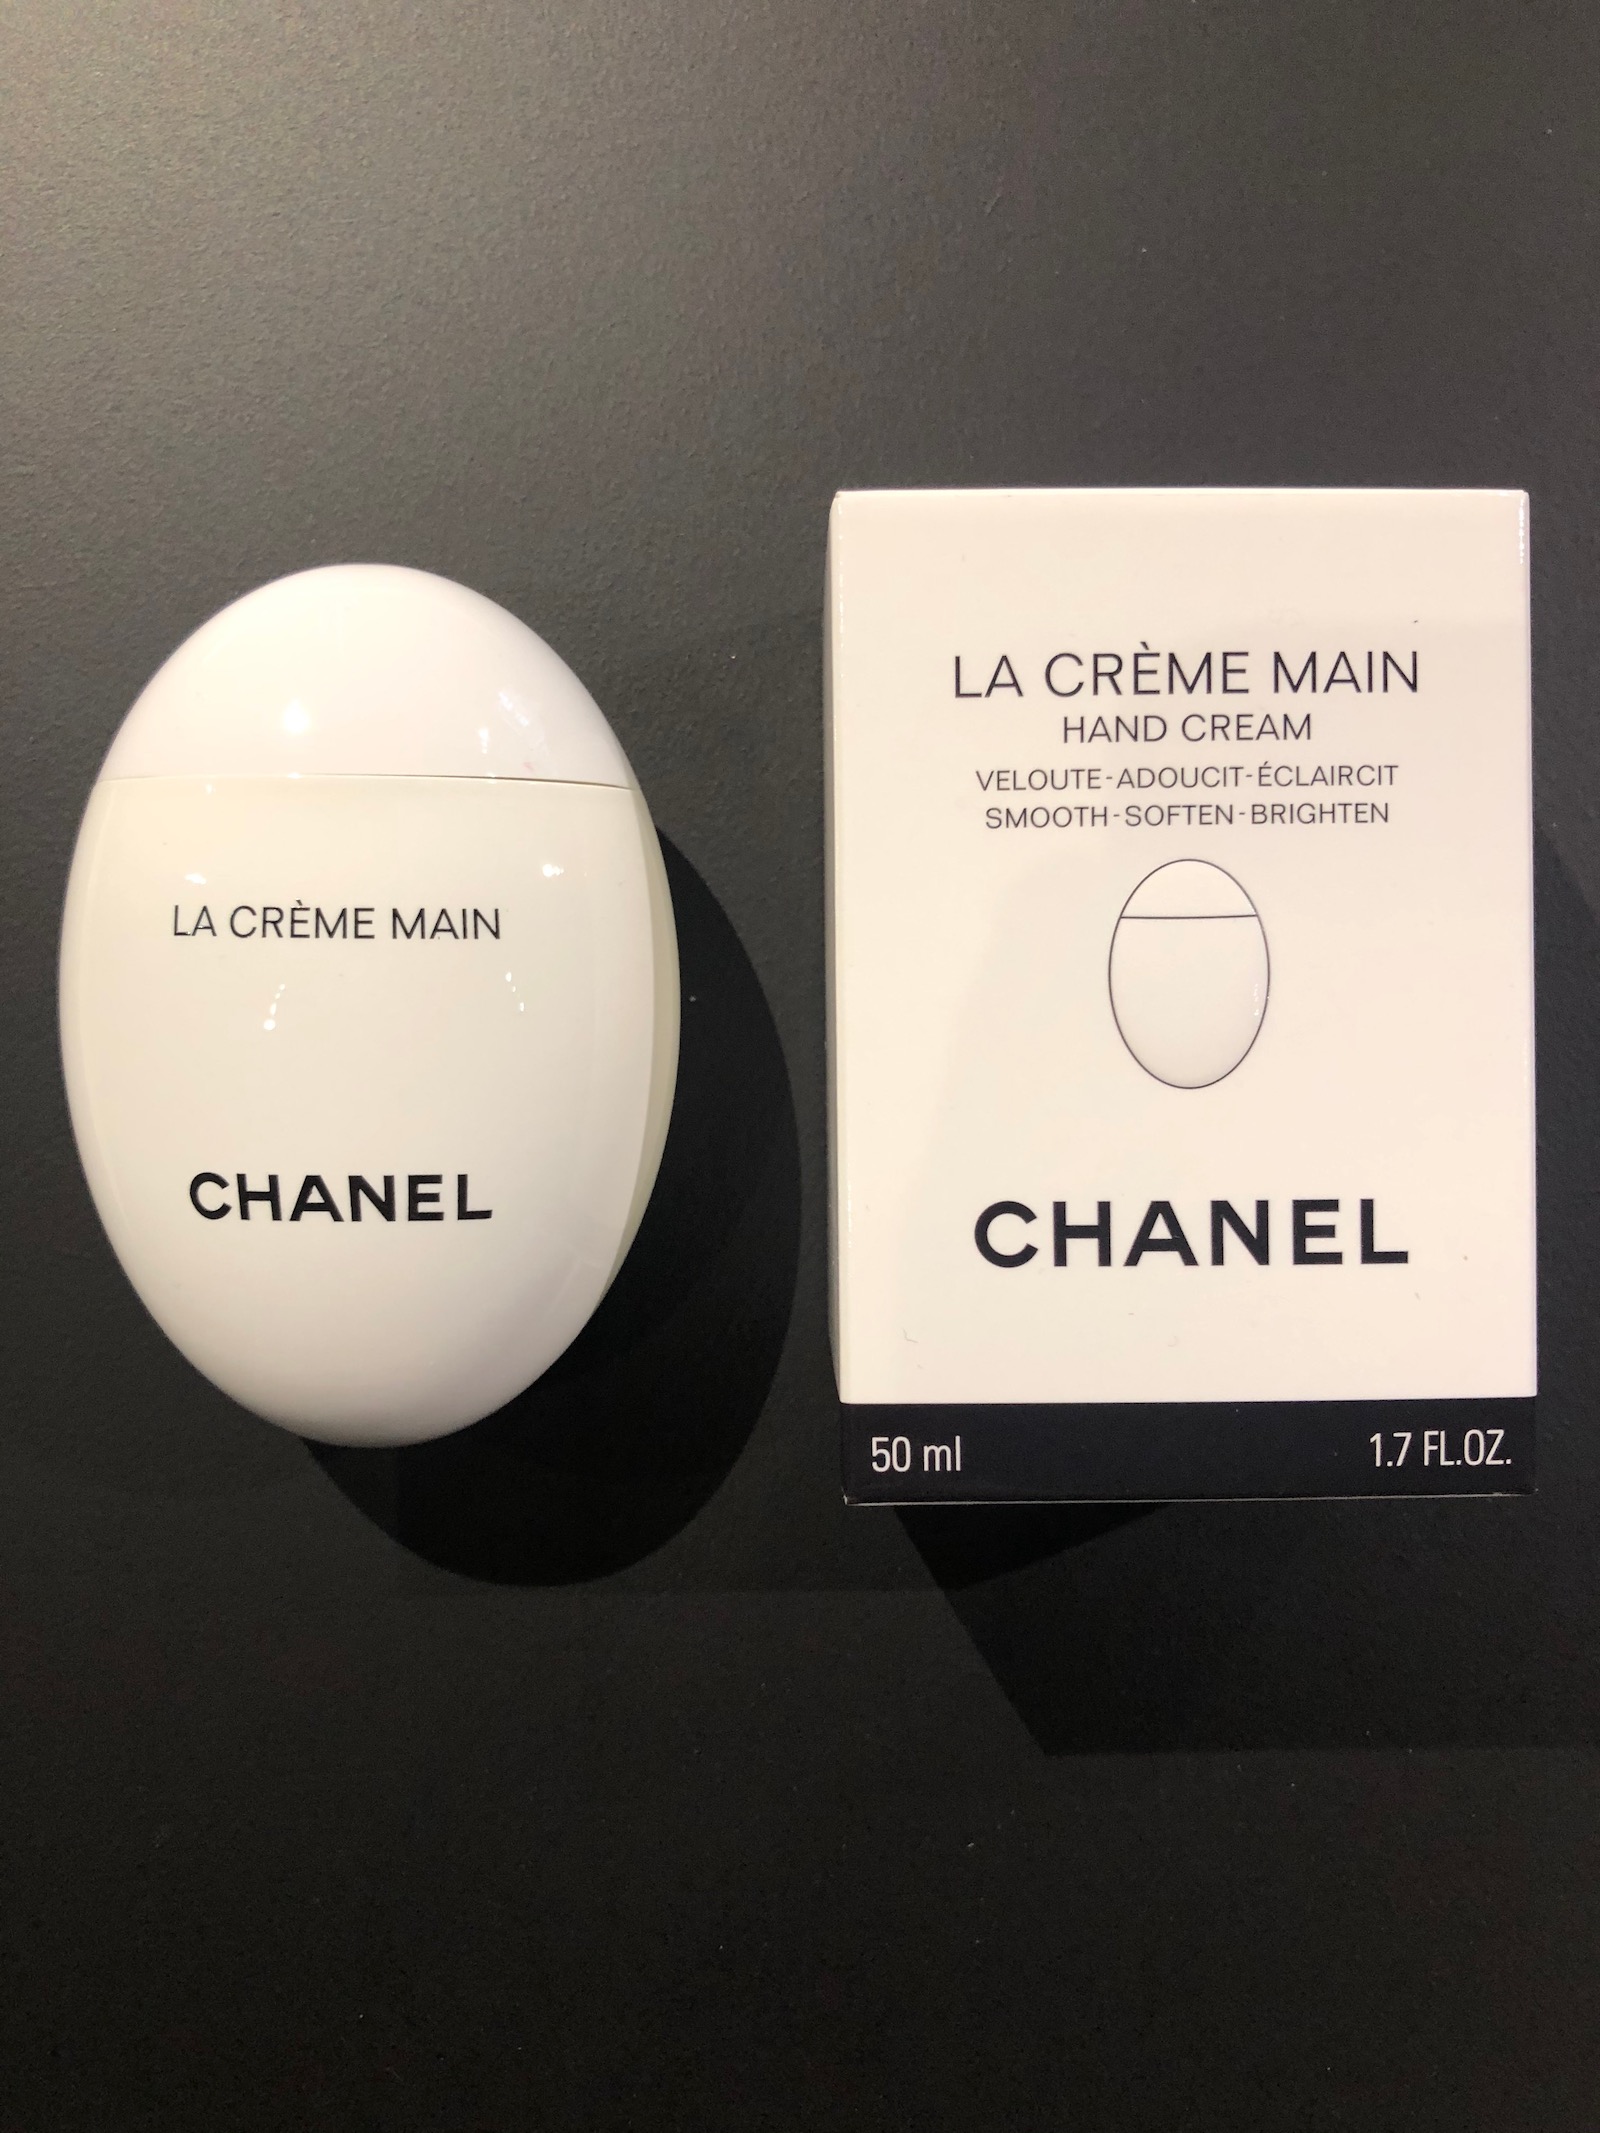 Press Trip de Chanel: A Masterclass in Branding - Ruth Crilly